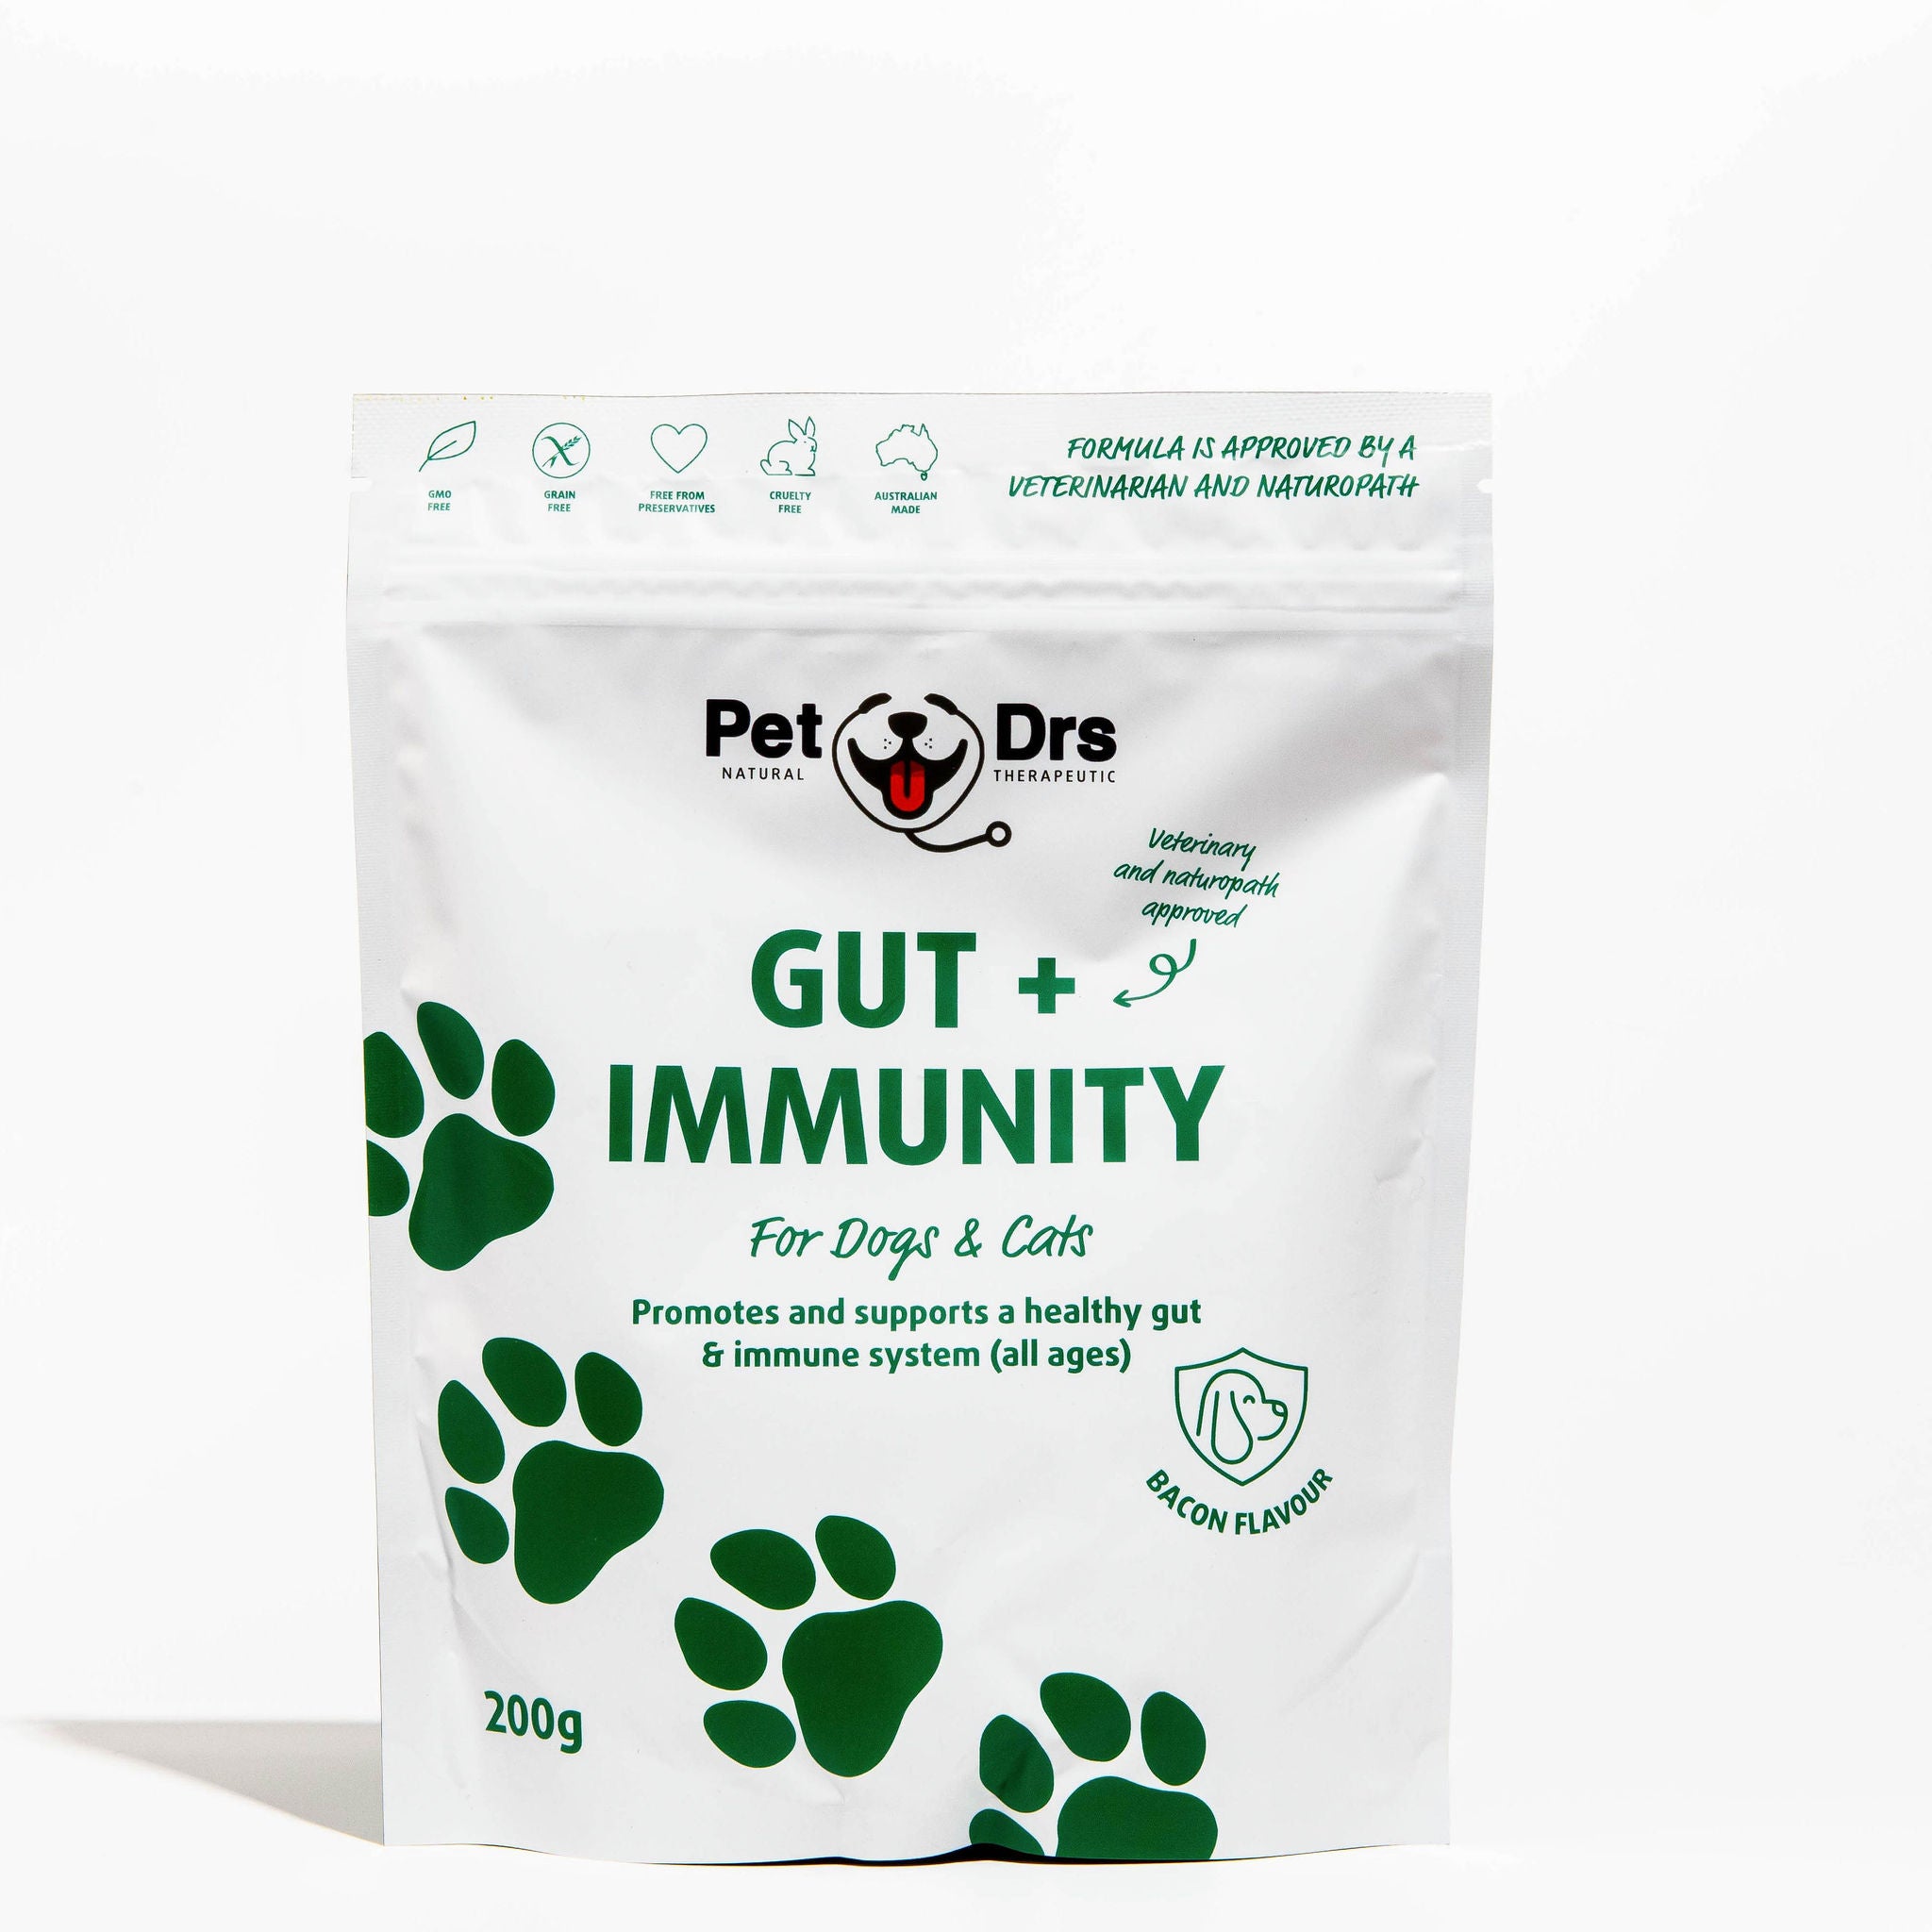 Gut + Immunity